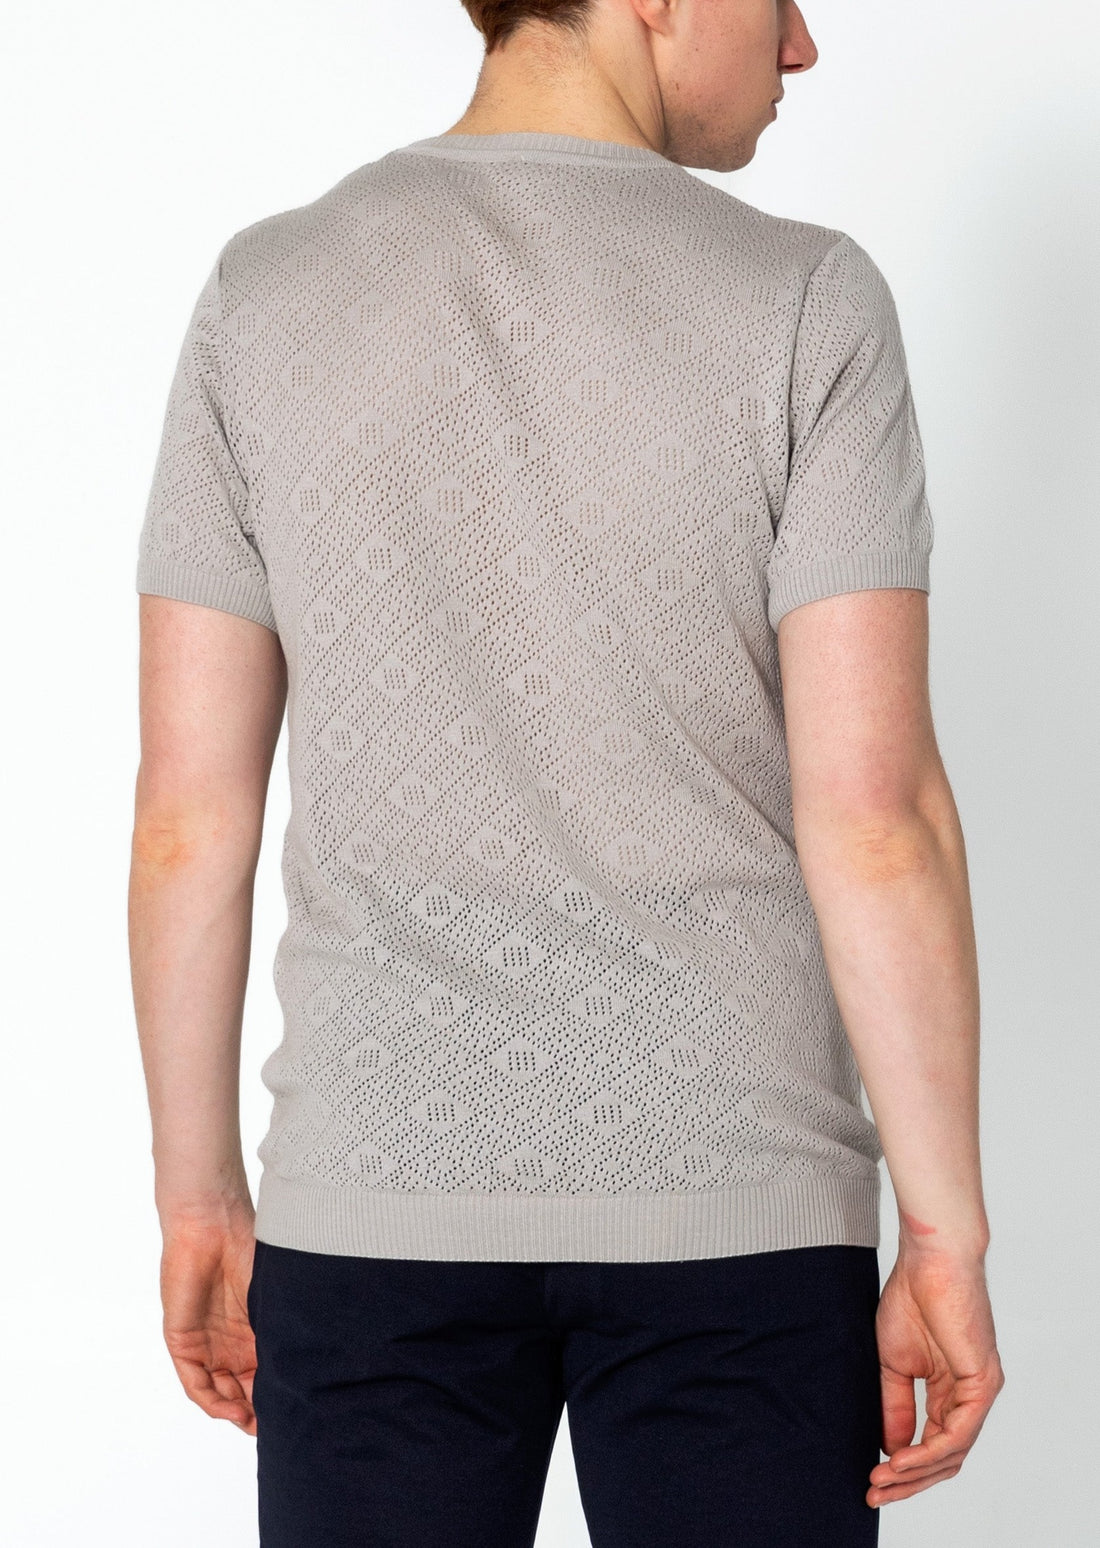 Geometric Crochet Knit Top - Grey